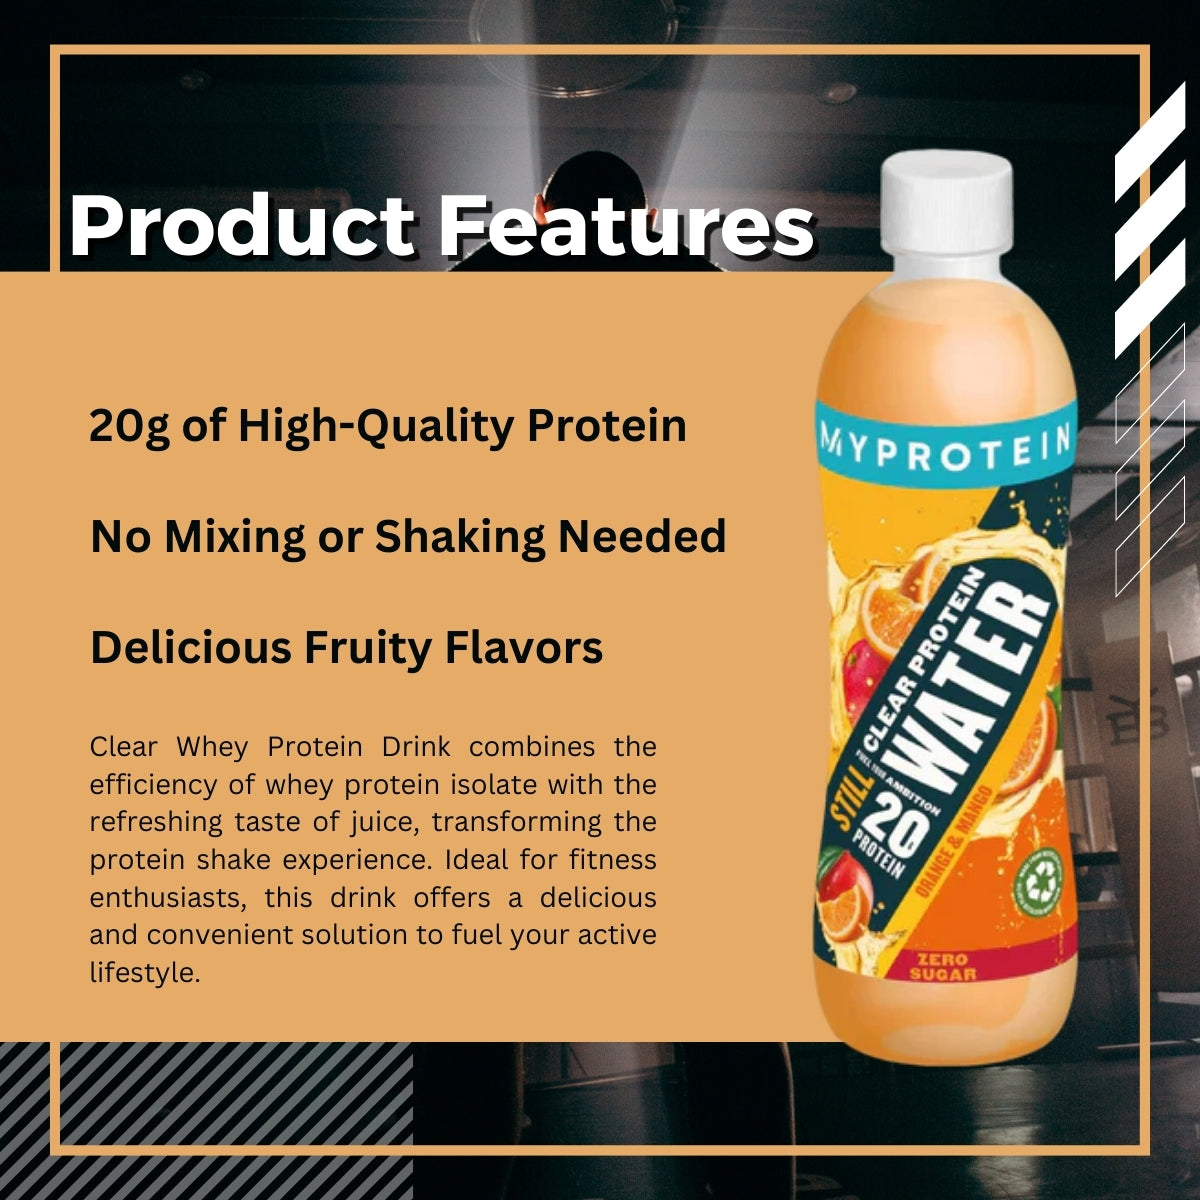 MyProtein Clear Protein Water, High Protein Drink - Features